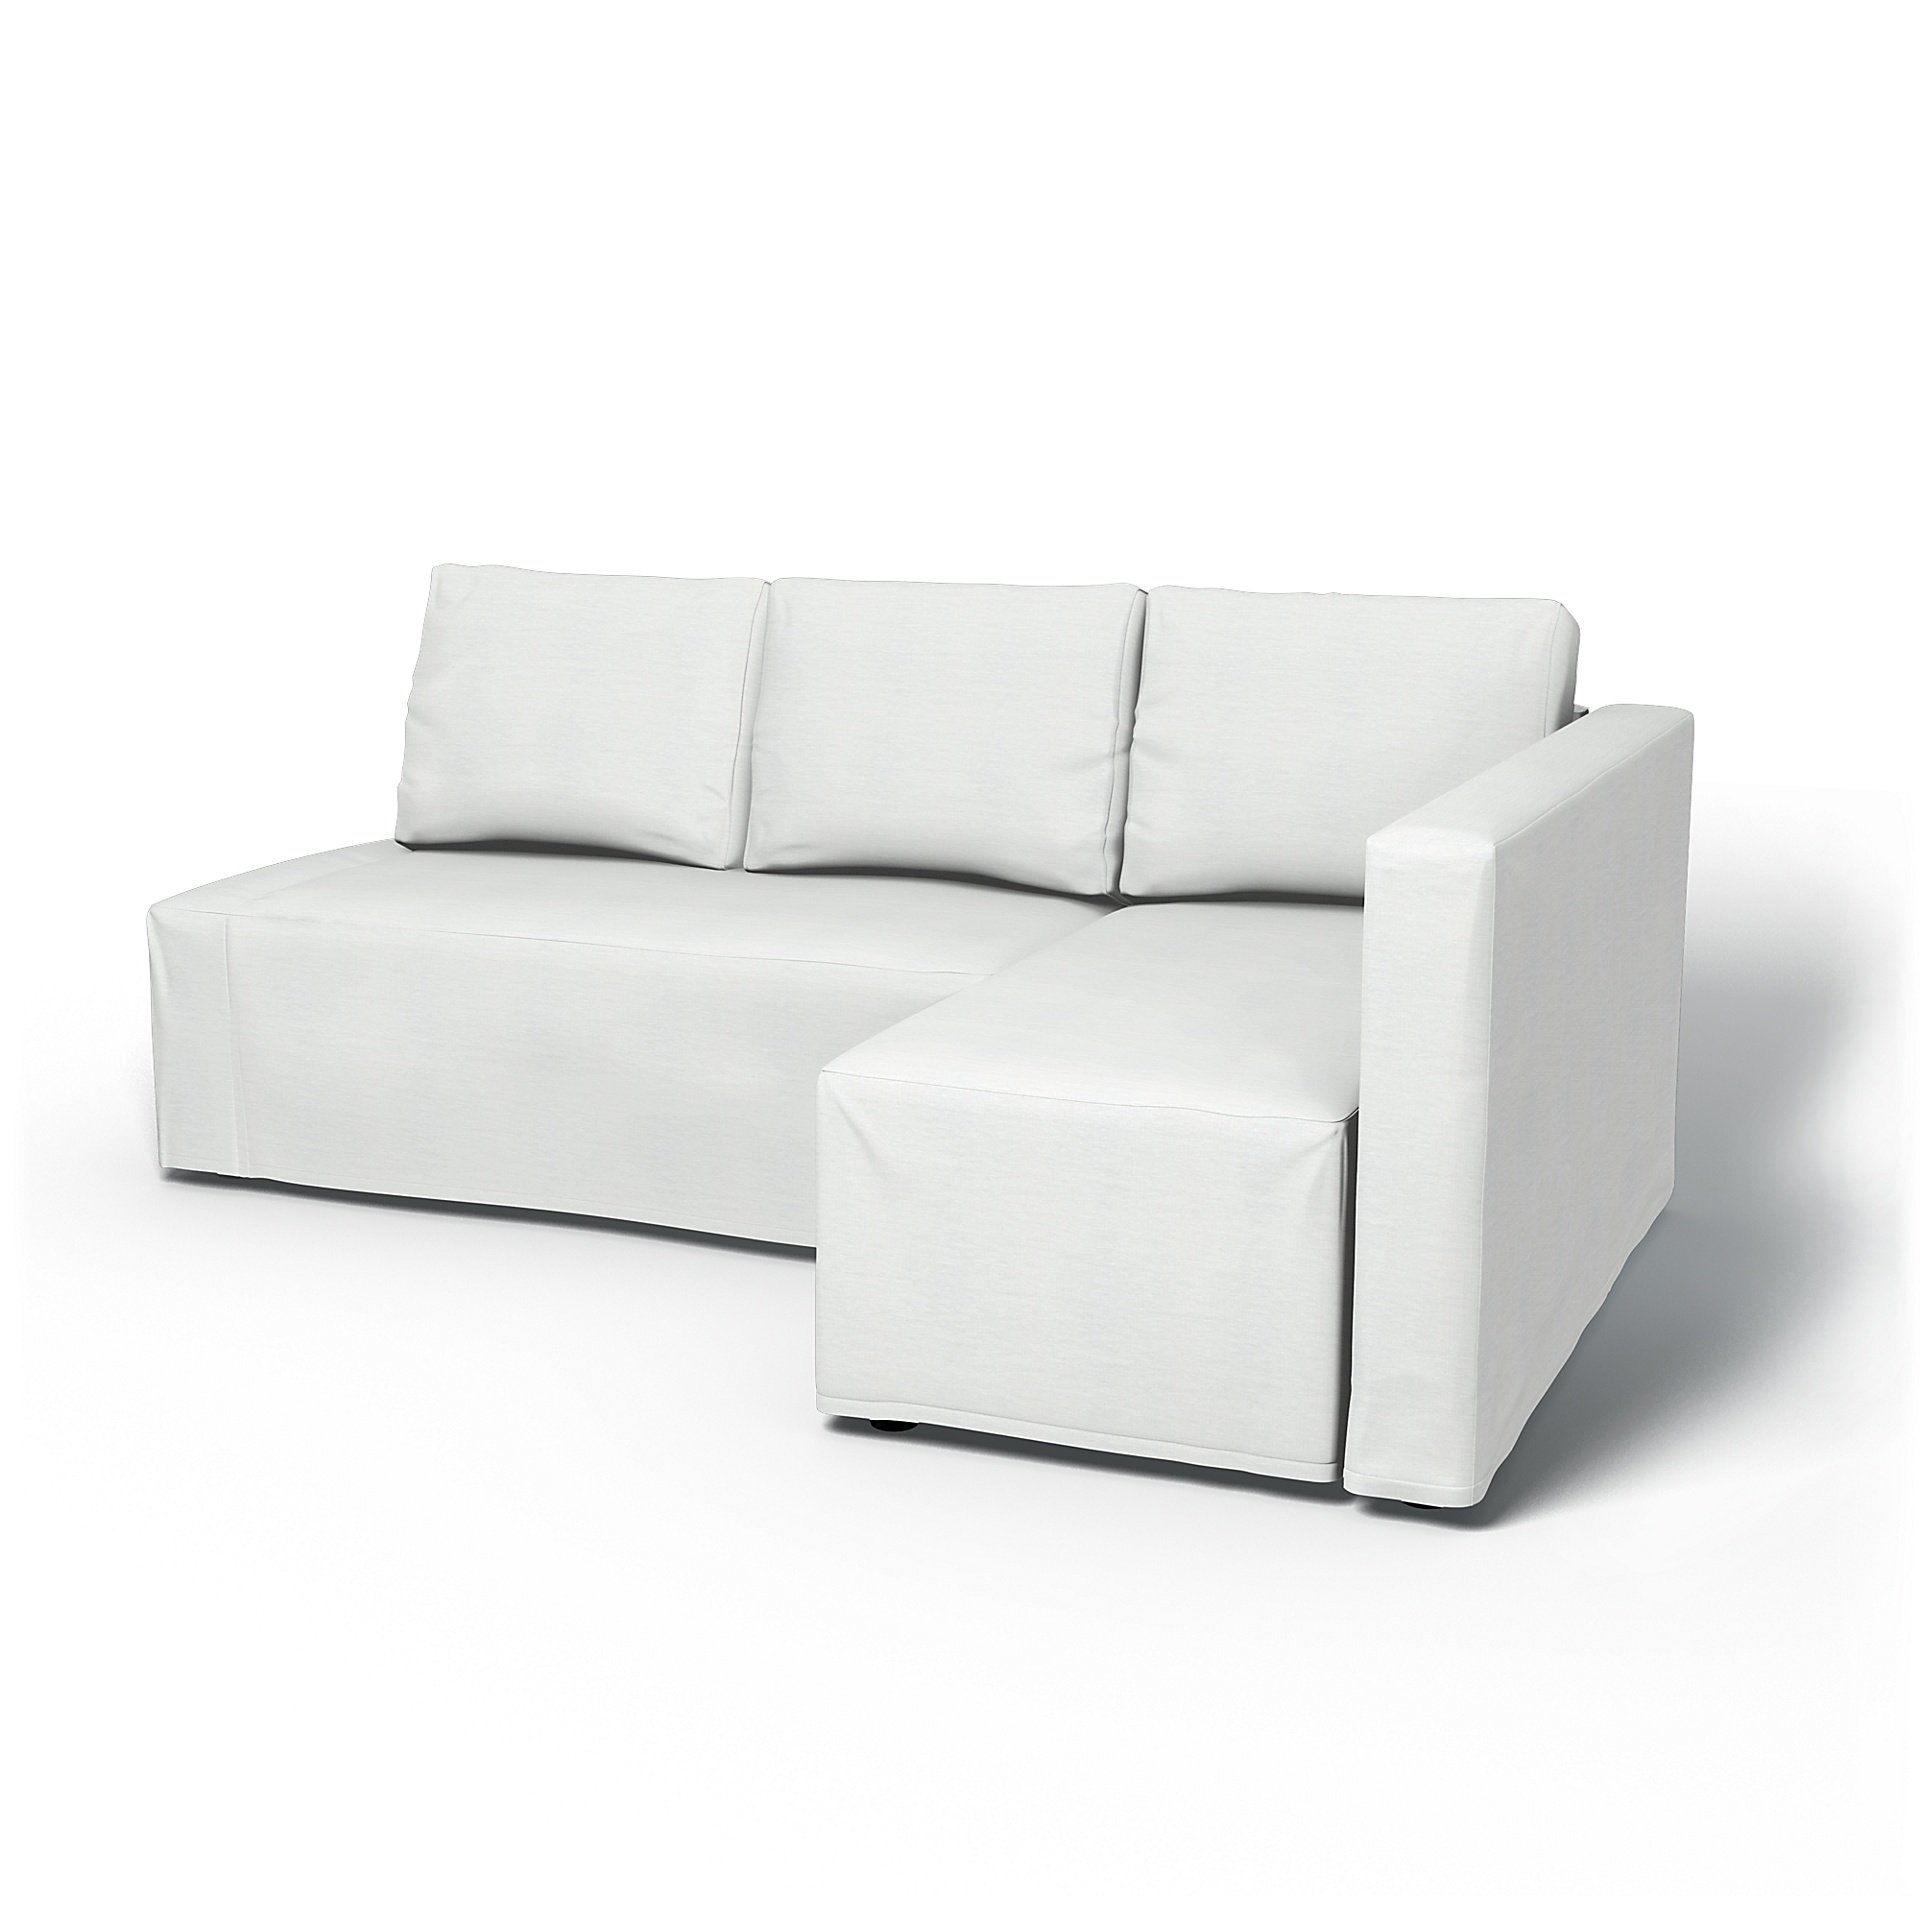 IKEA - Friheten Sofa Bed with Right Chaise Cover, White, Linen - Bemz